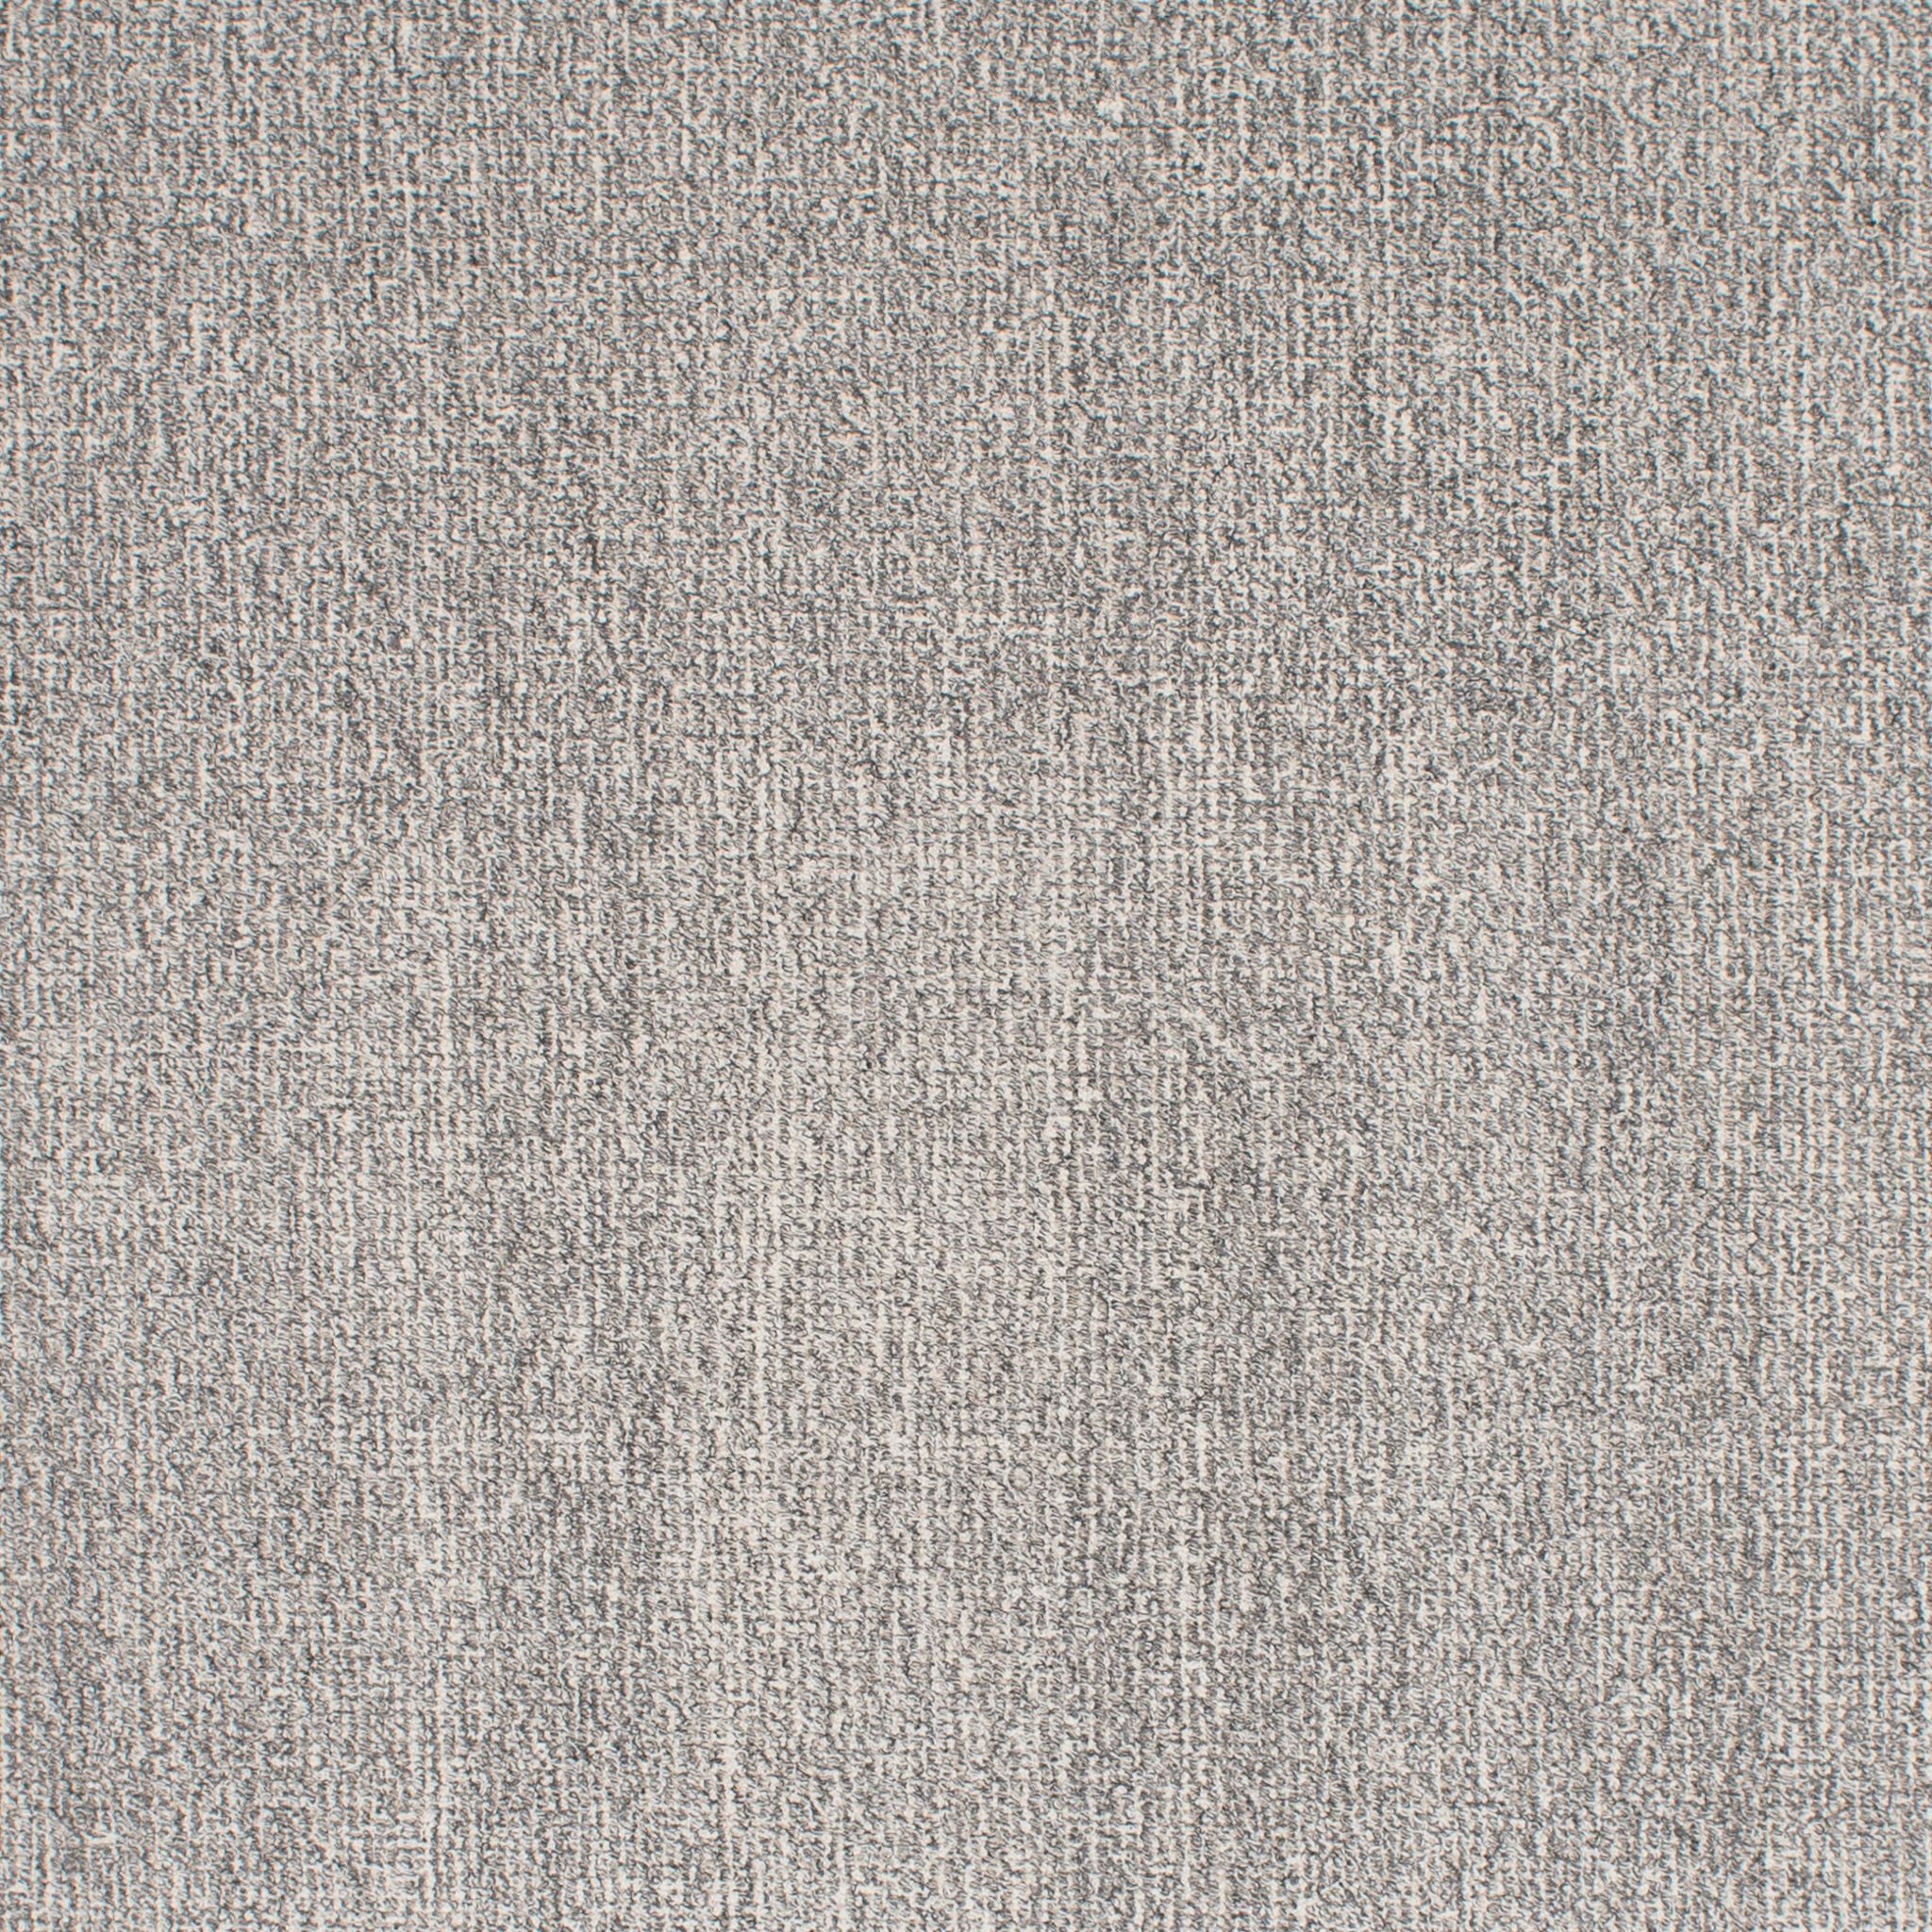 Fanning Hand-Tufted Carpet, Onyx Default Title